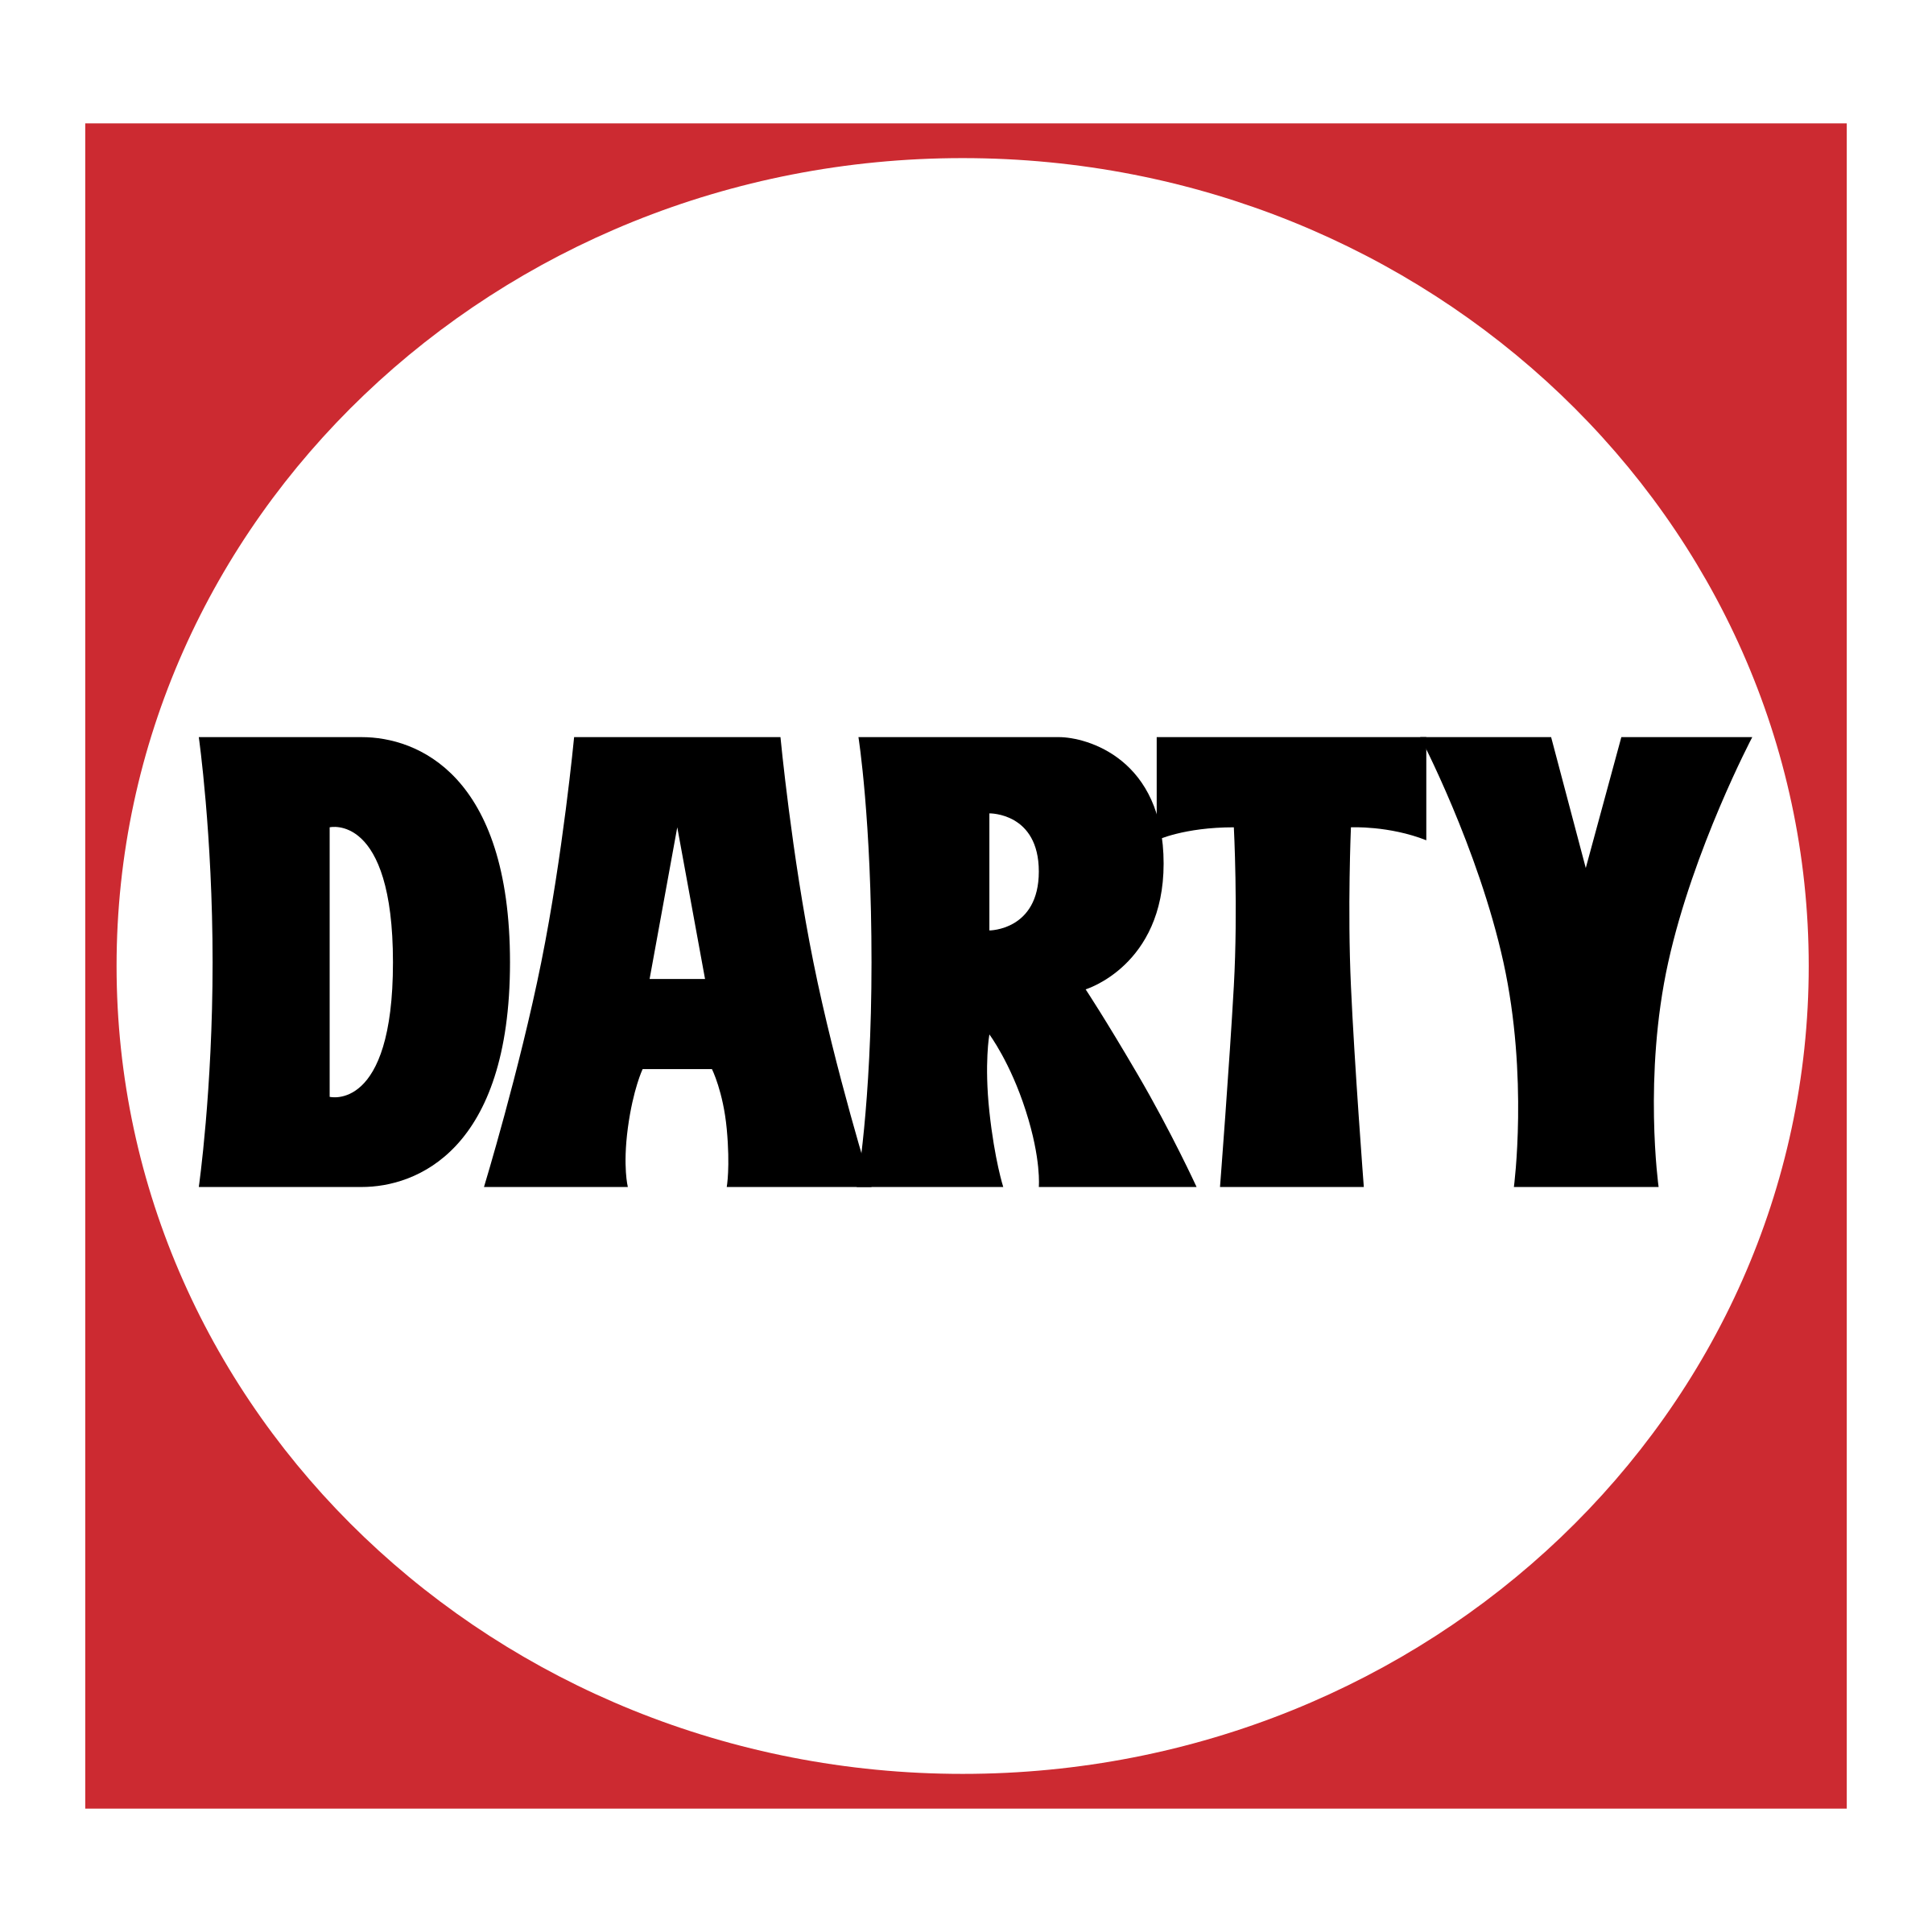 darty